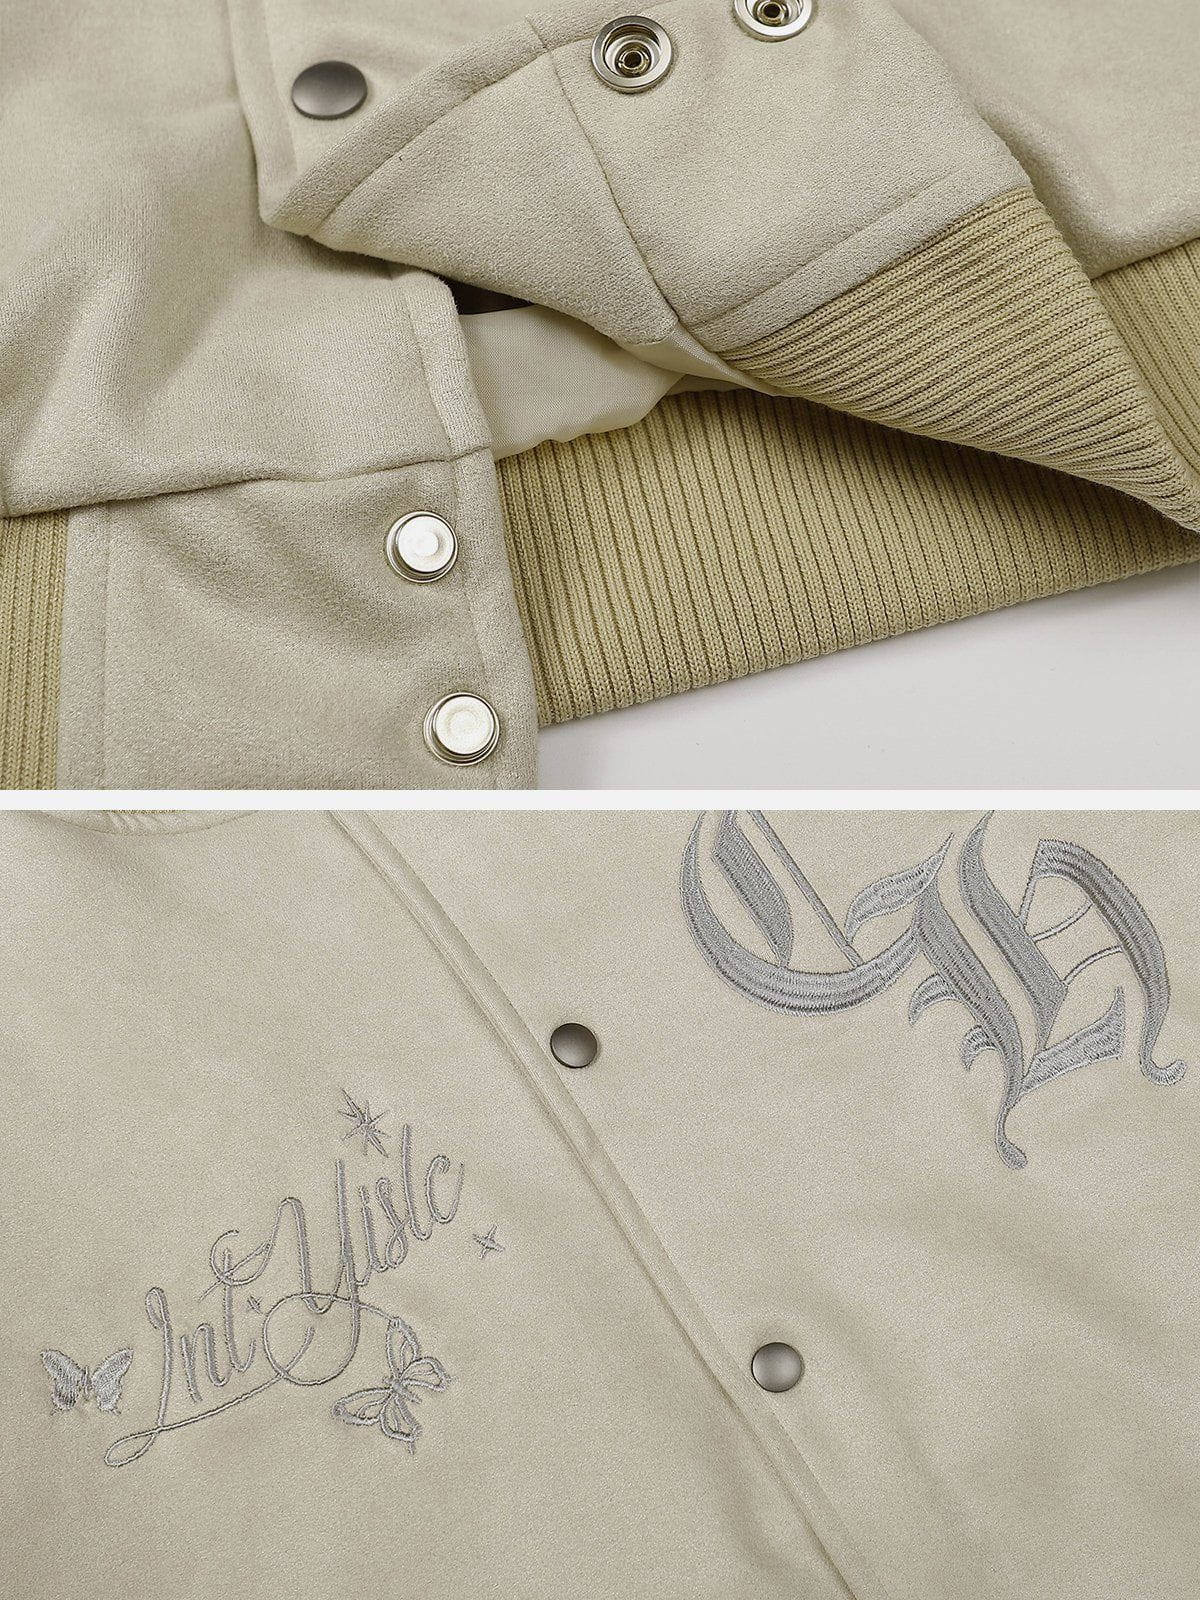 Majesda® - Suede Embroidered Varsity Jacket outfit ideas, streetwear fashion - majesda.com